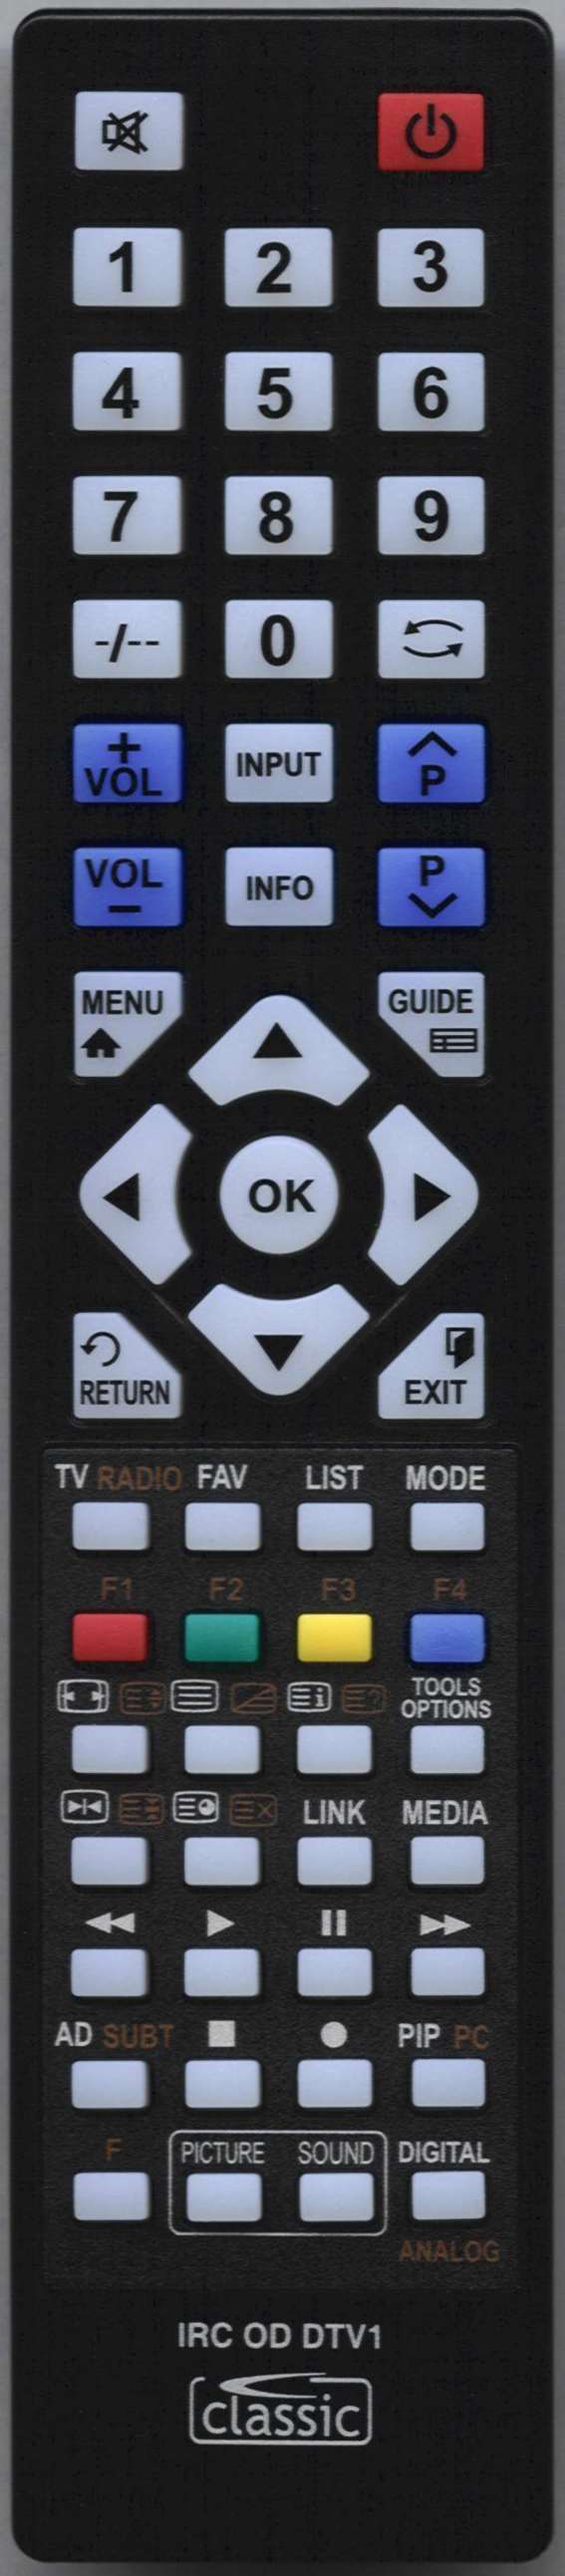 SEIKI SE24FY02UK Remote Control Alternative